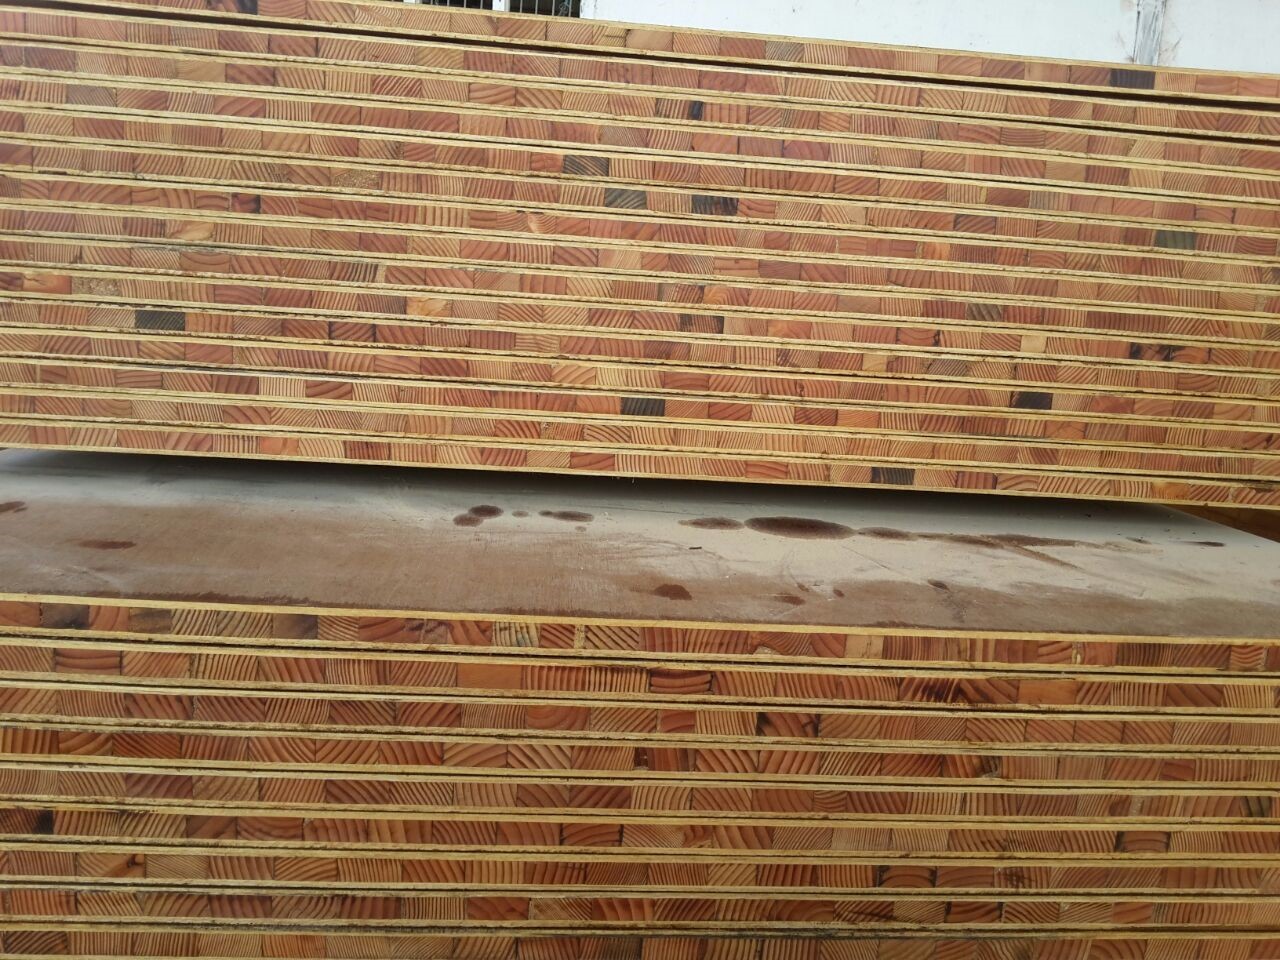 Pine Block Board